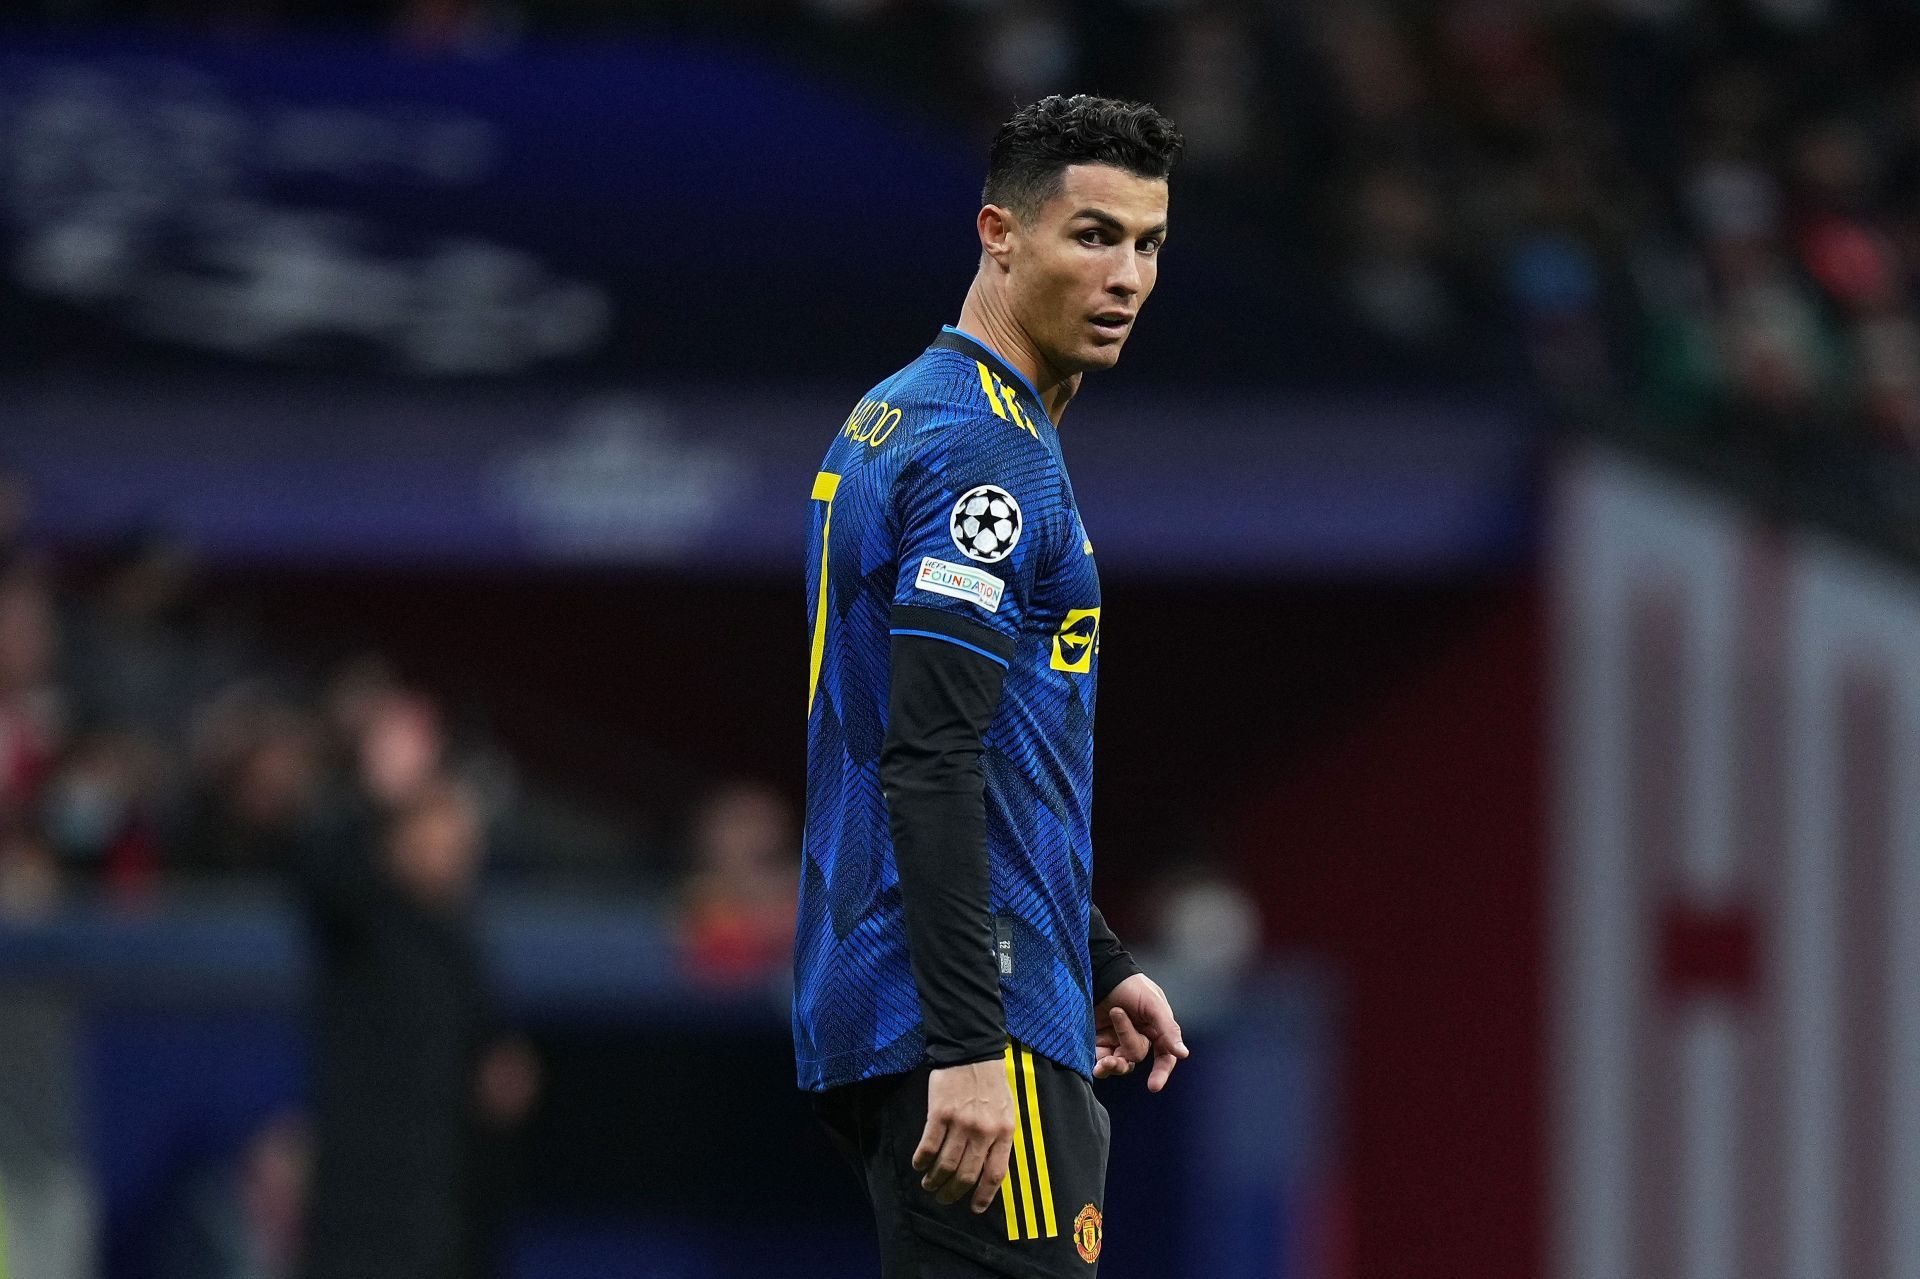 Cristiano Ronaldo has struggled since arriving at Old Trafford last summer.